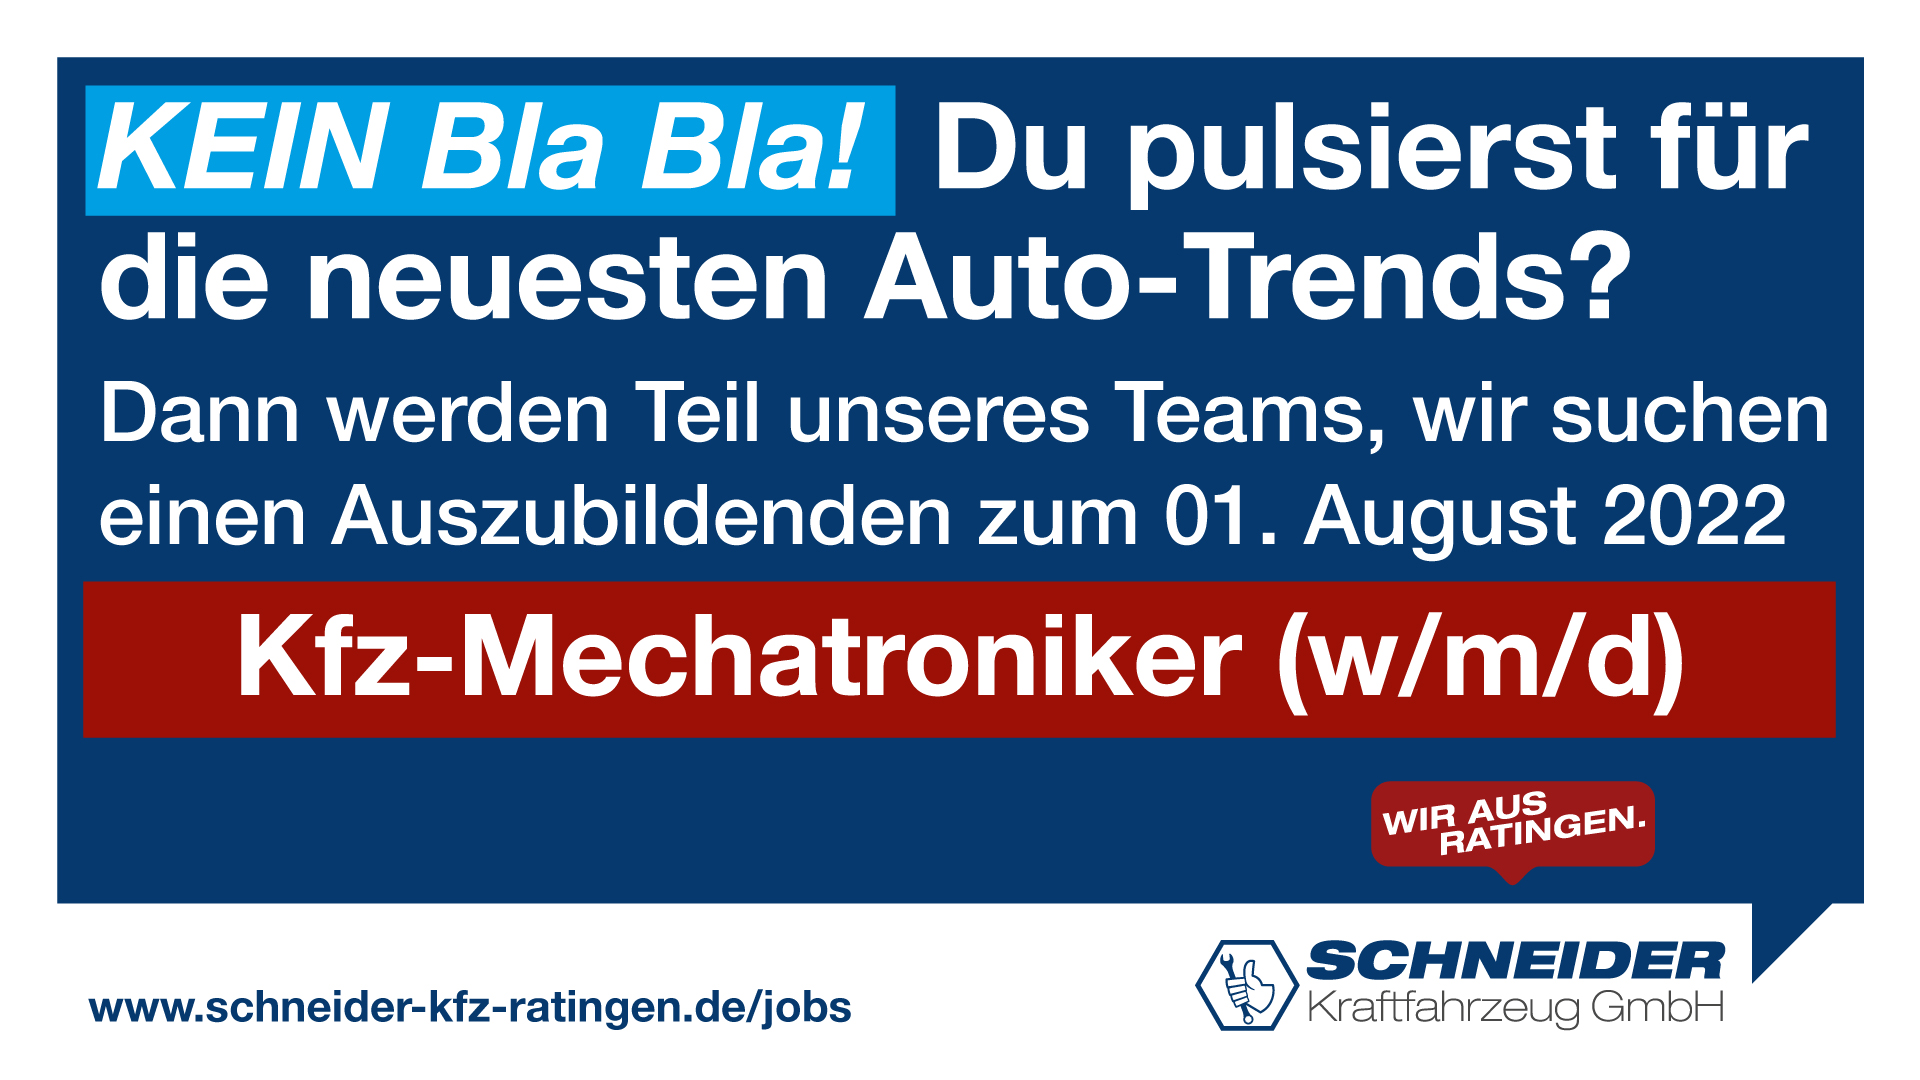 KFZ-Mechatroniker | Schneider Kraftfahrzeug GmbH - Ratingen